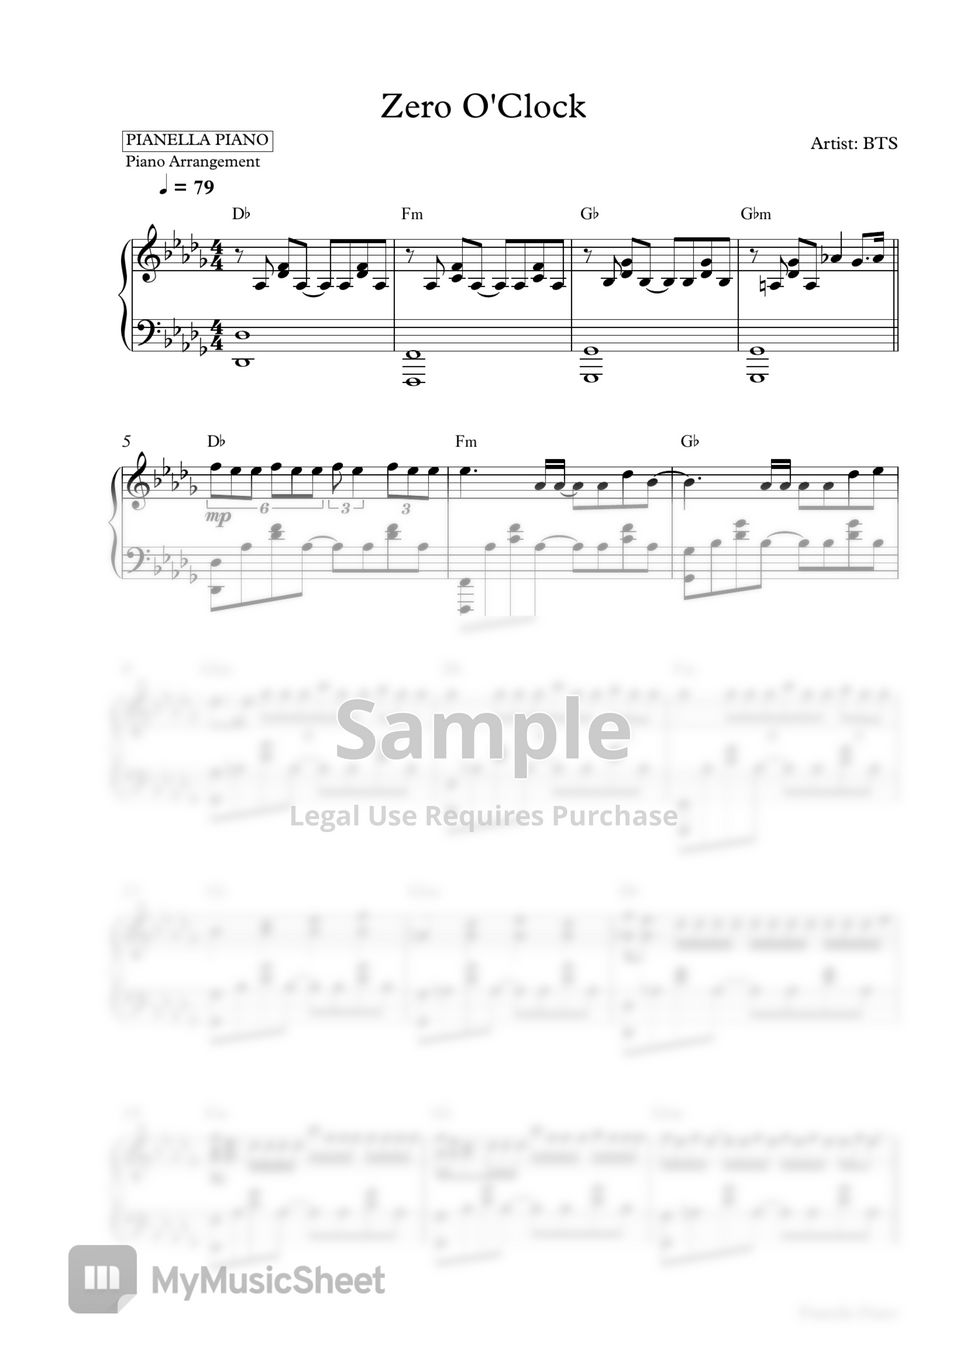 BTS - 00:00 Zero O'Clock (Piano Sheet) by Pianella Piano